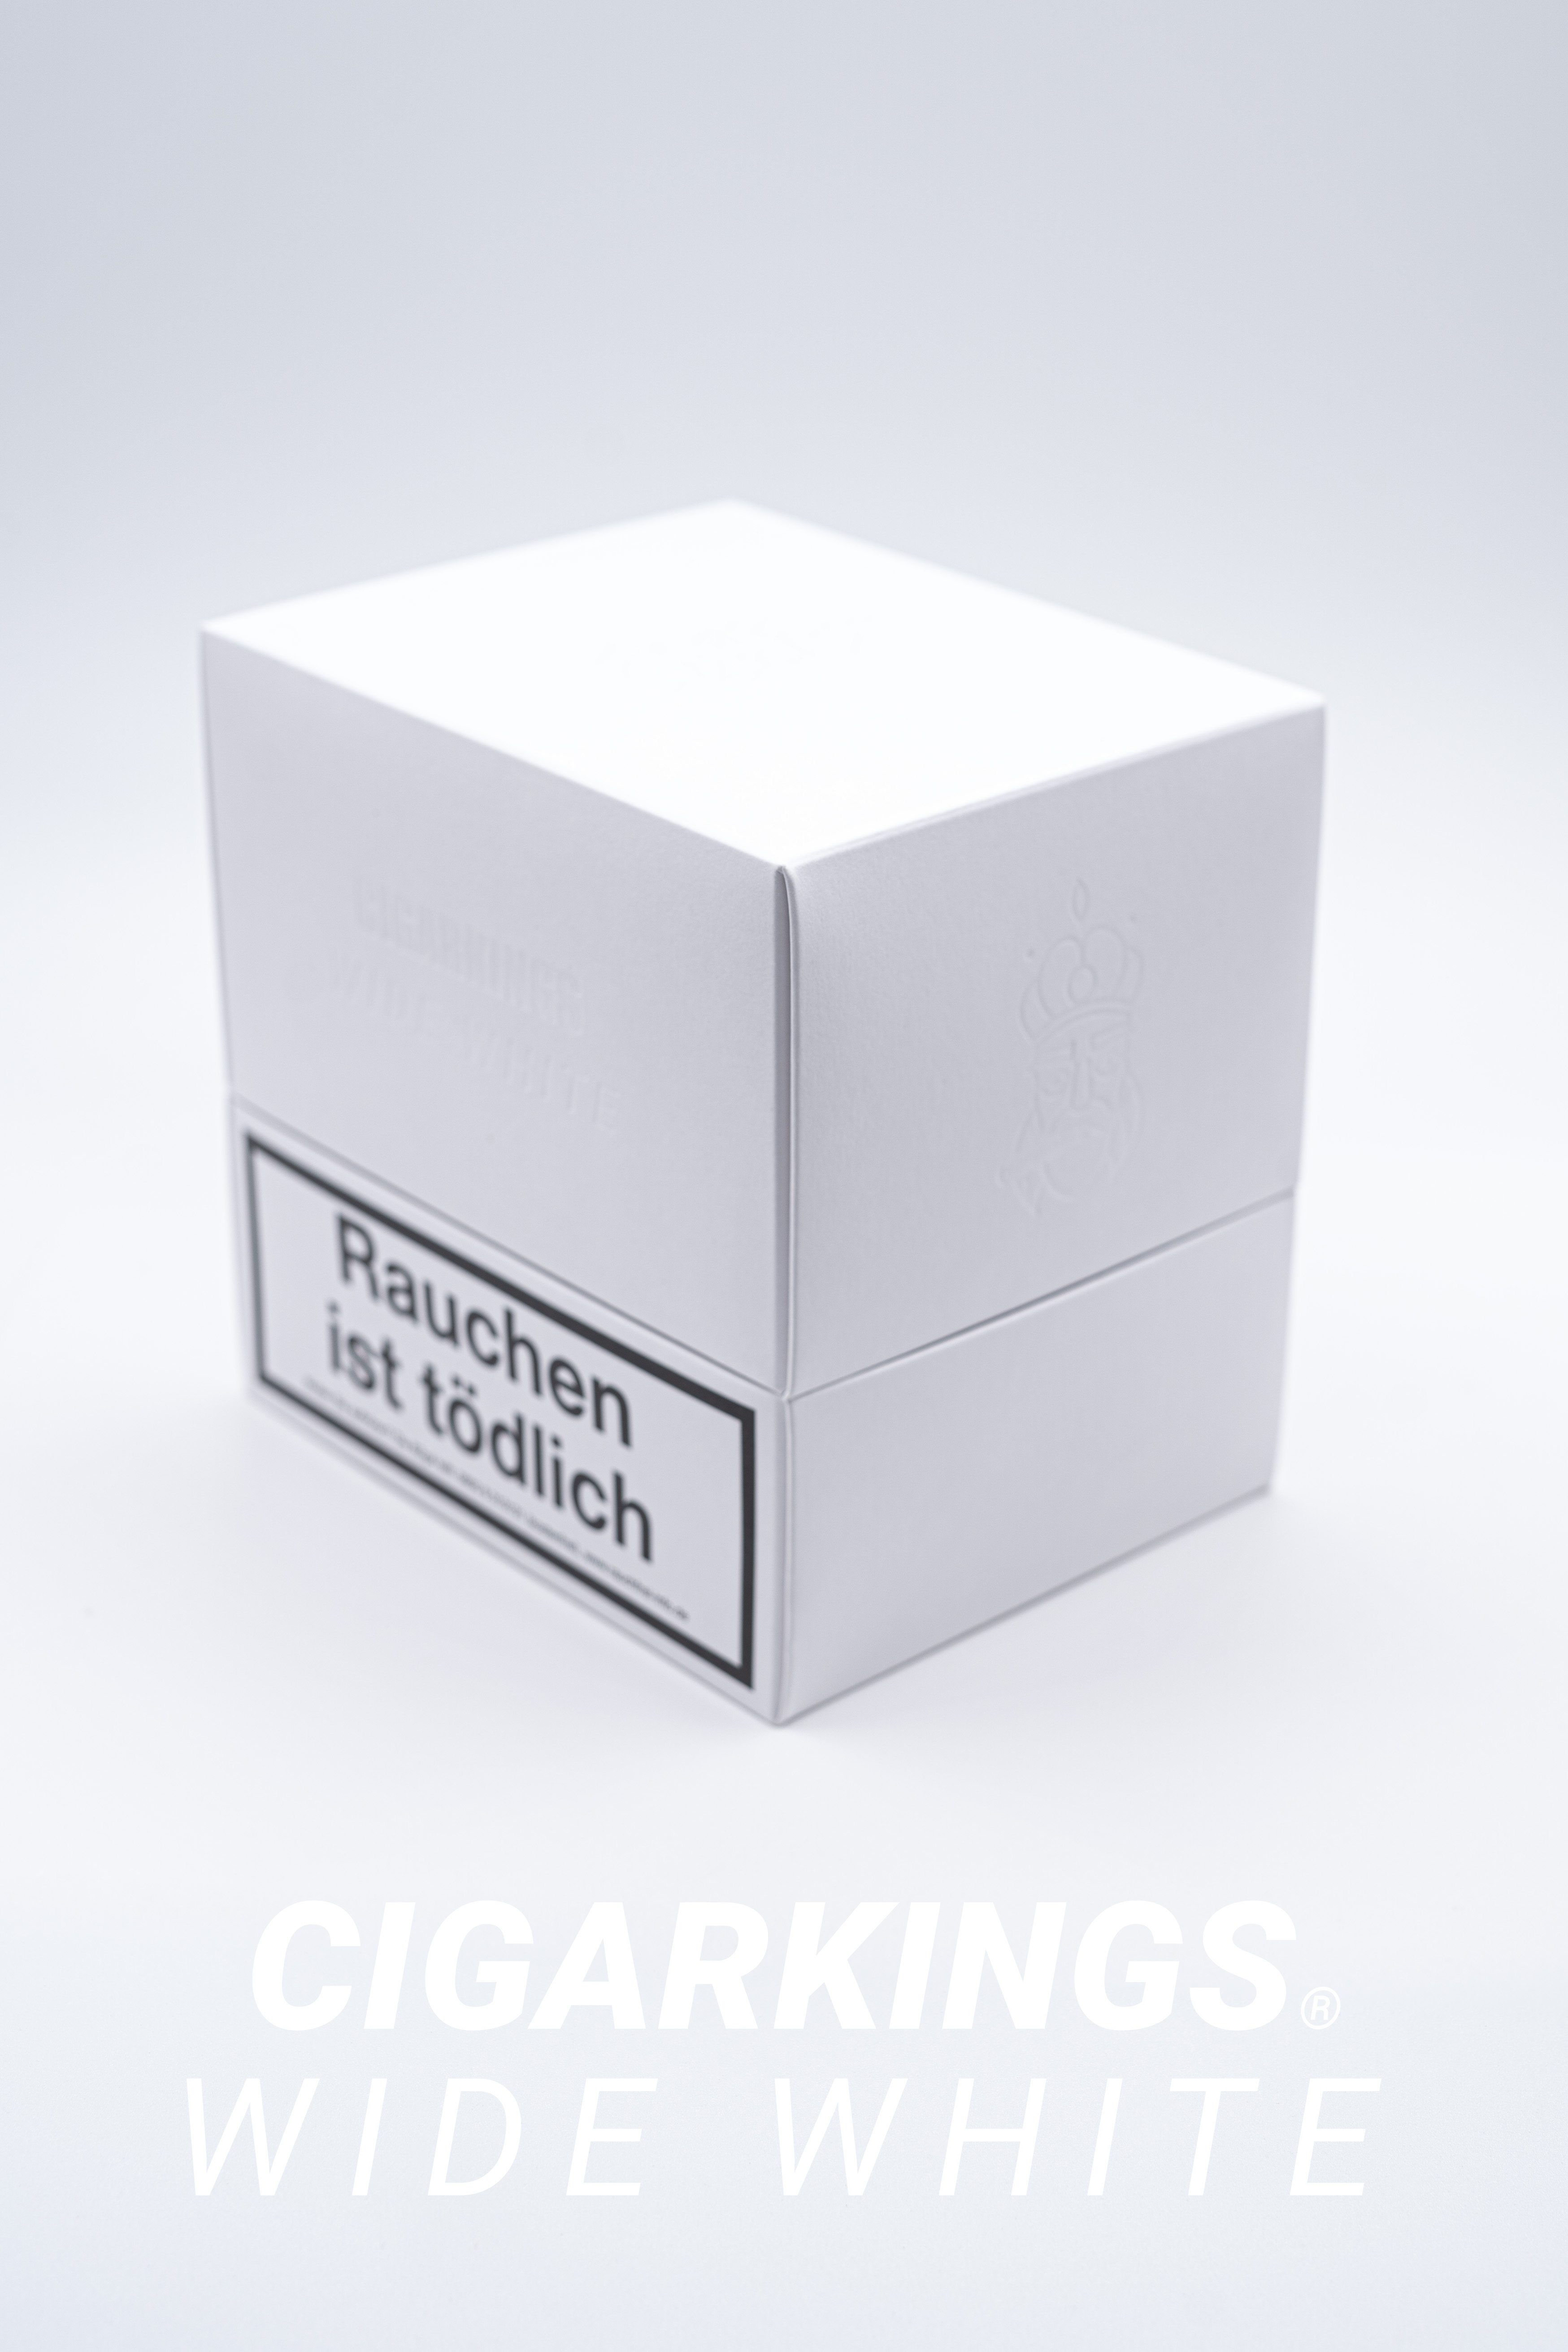 CigarKings Shop – CigarKings GmbH